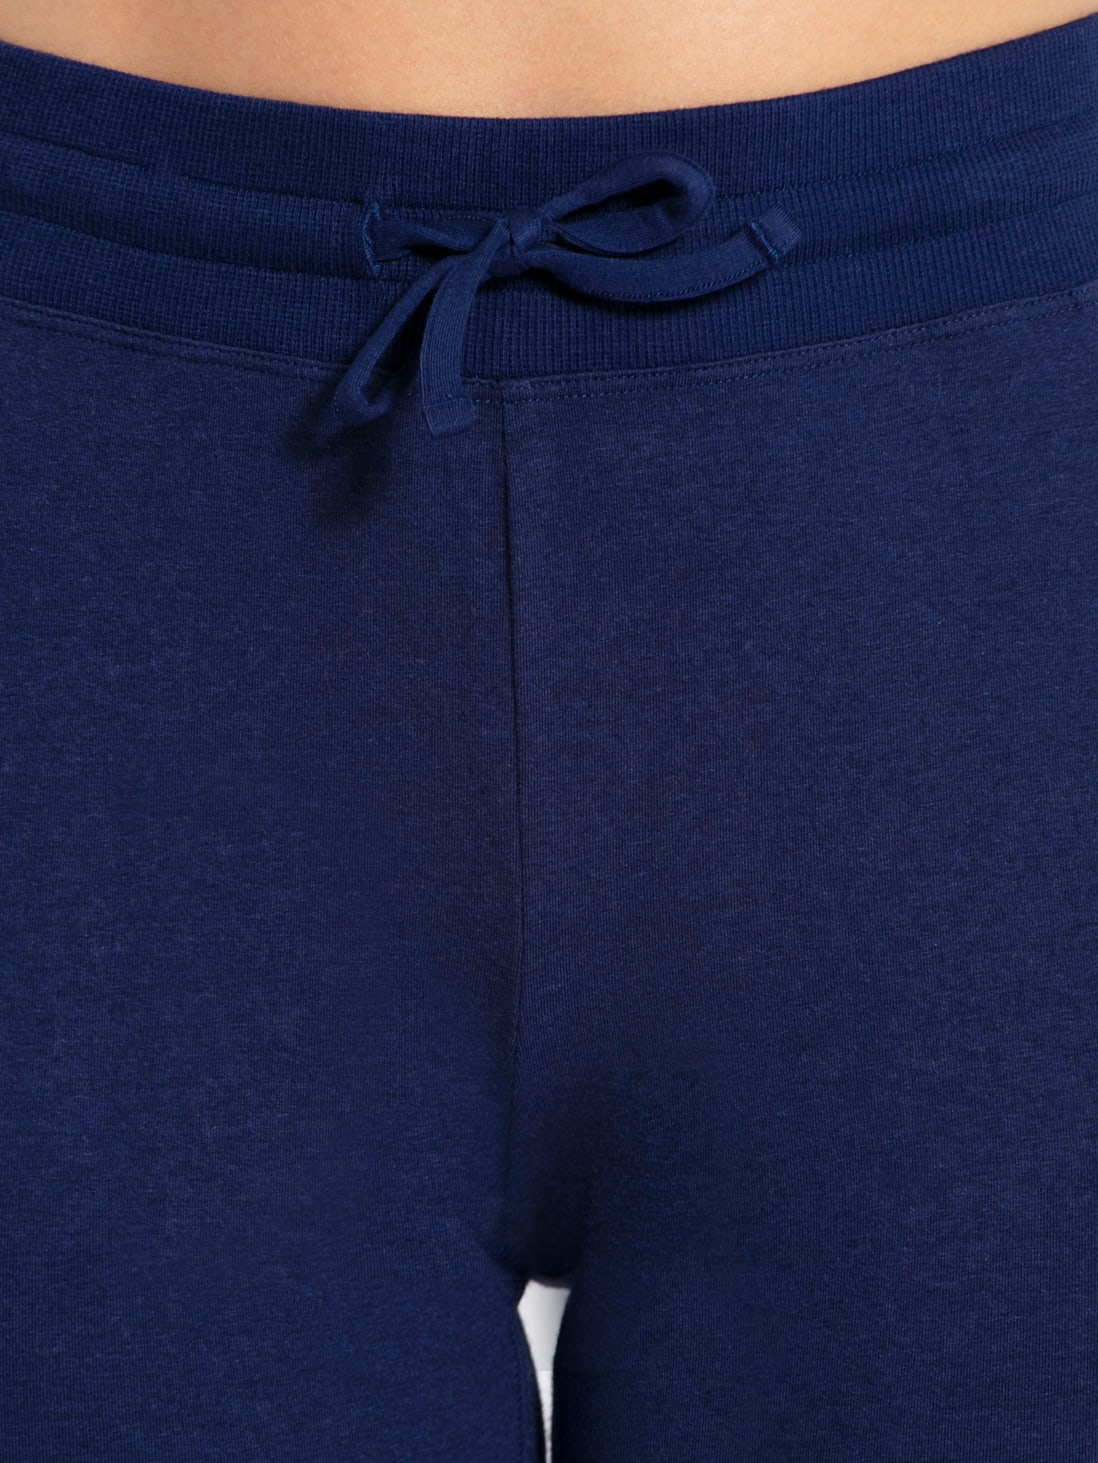 JOCKEY Side Pocket Leggings (Blue Melange Printed, Size - S) in Tirupur at  best price by Fibre Knit Clothing - Justdial